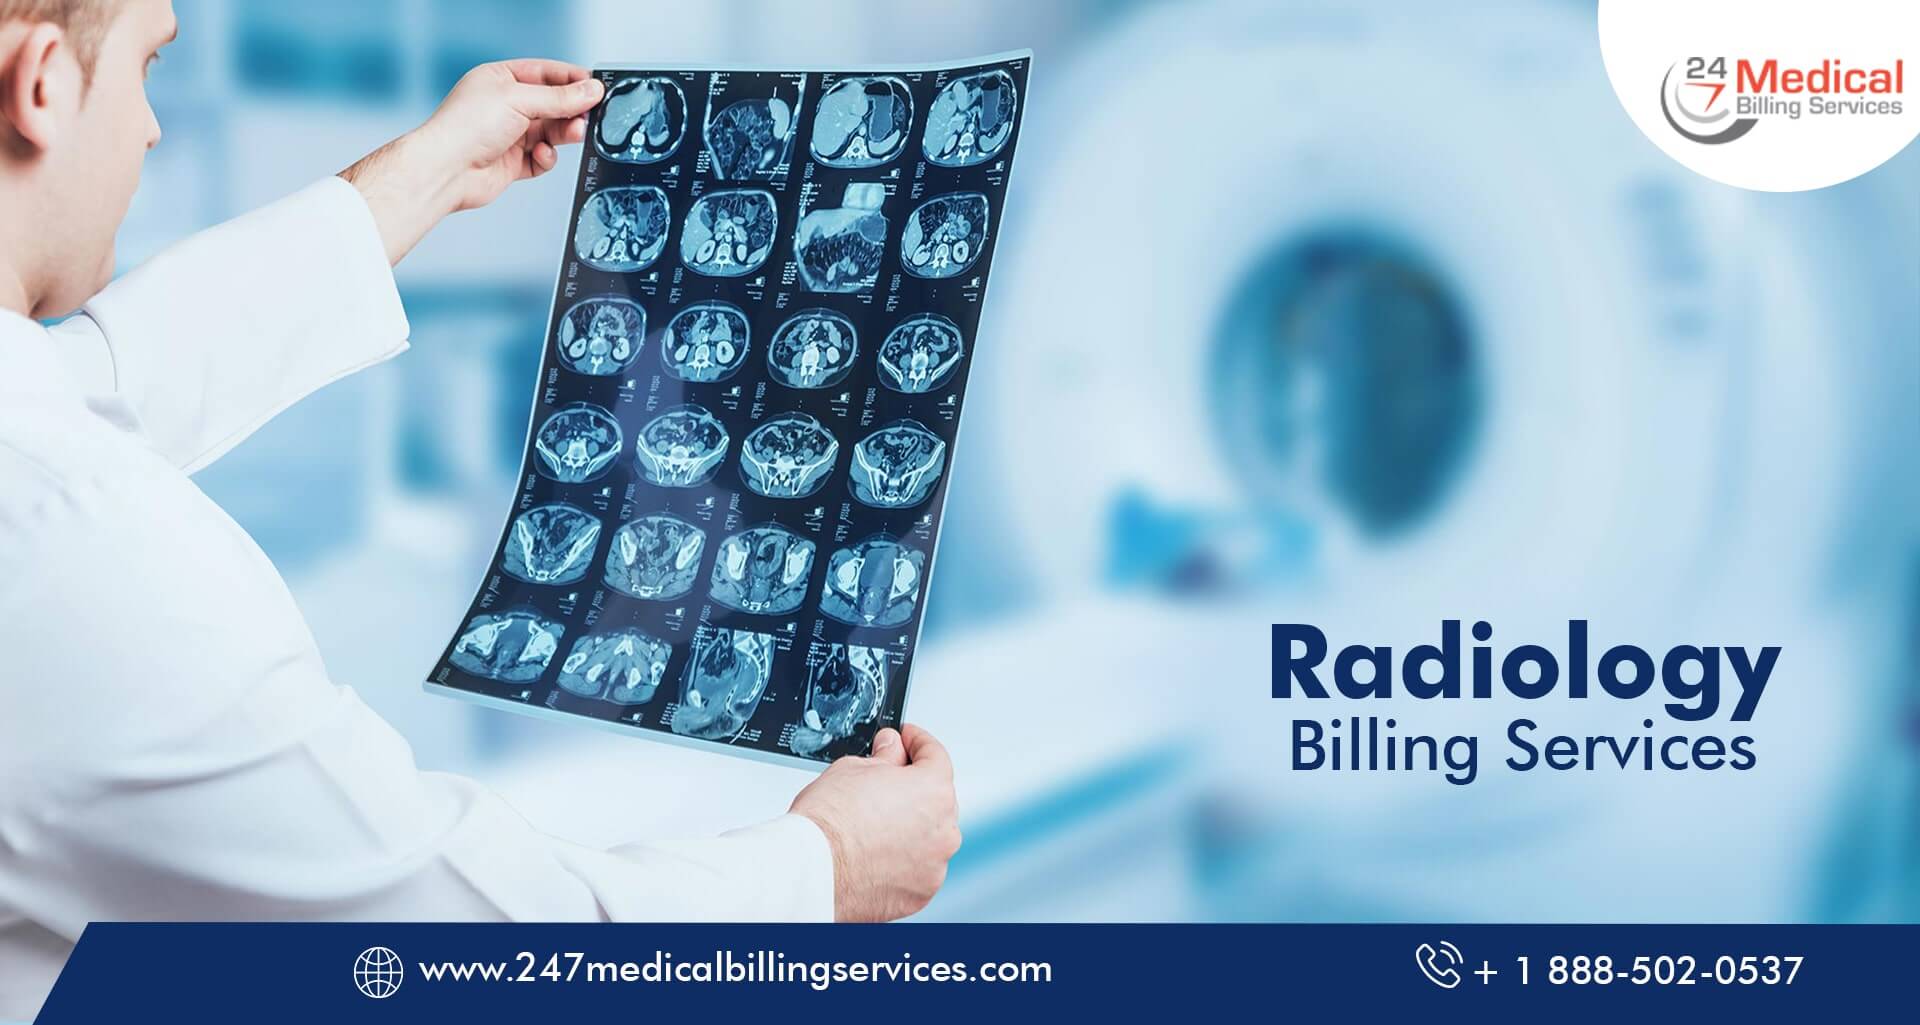 Radiology Billing Services in Kansas City, Missouri (MO) - 24/7 Medical Billing Services